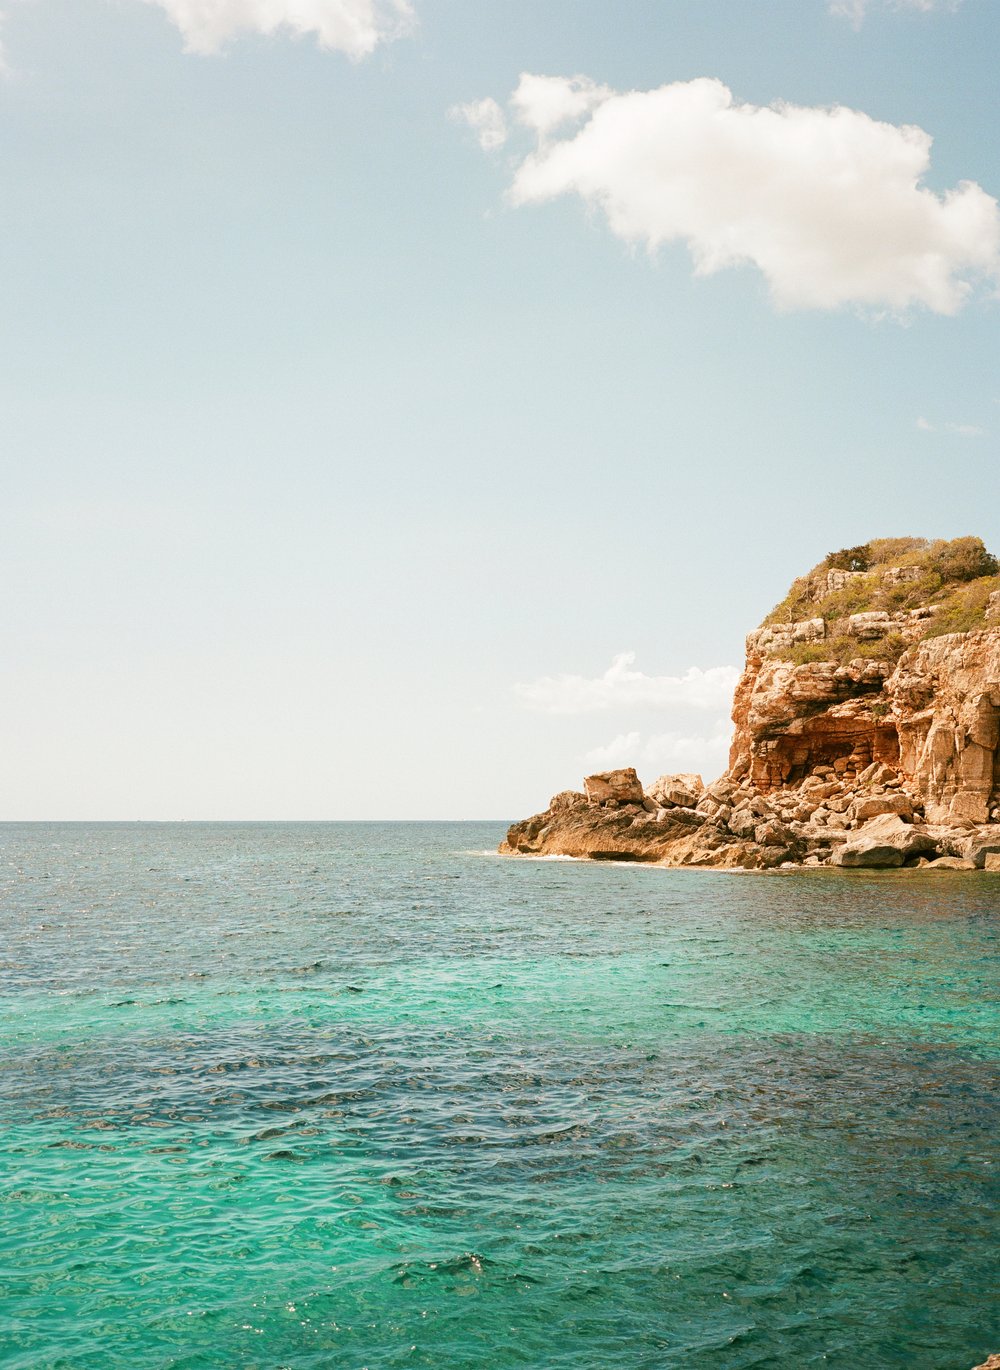  Ocean and rocky beaches of Mallorca, Spain 